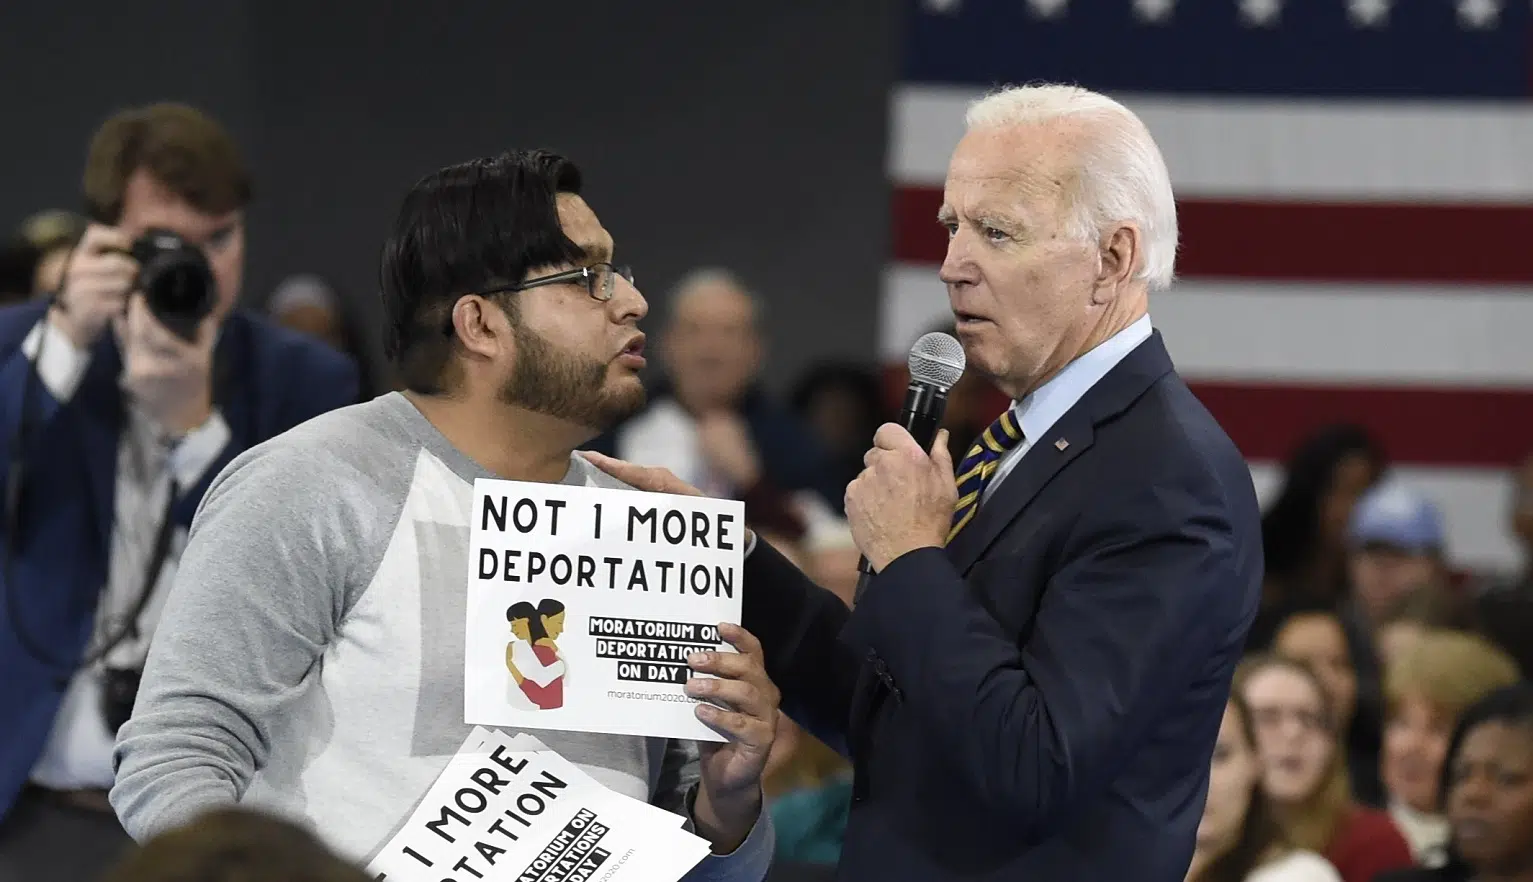 Biden Expands Quick Bid to Undo Trump’s Immigration Policies